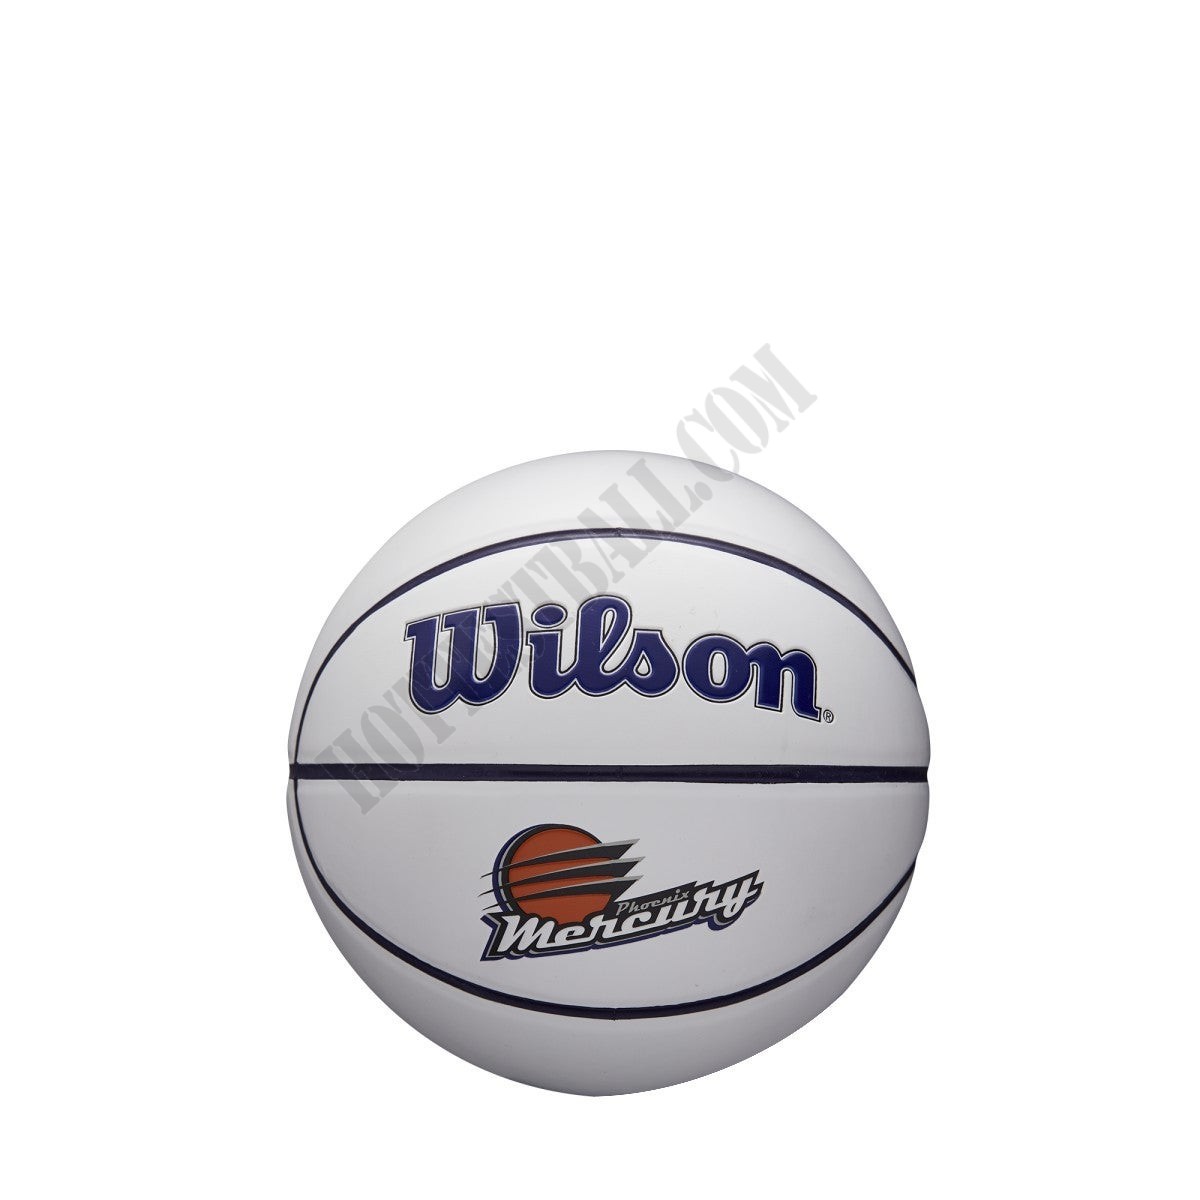 WNBA Team Mini Autograph Basketball - Phoenix Mercury - Wilson Discount Store - -0